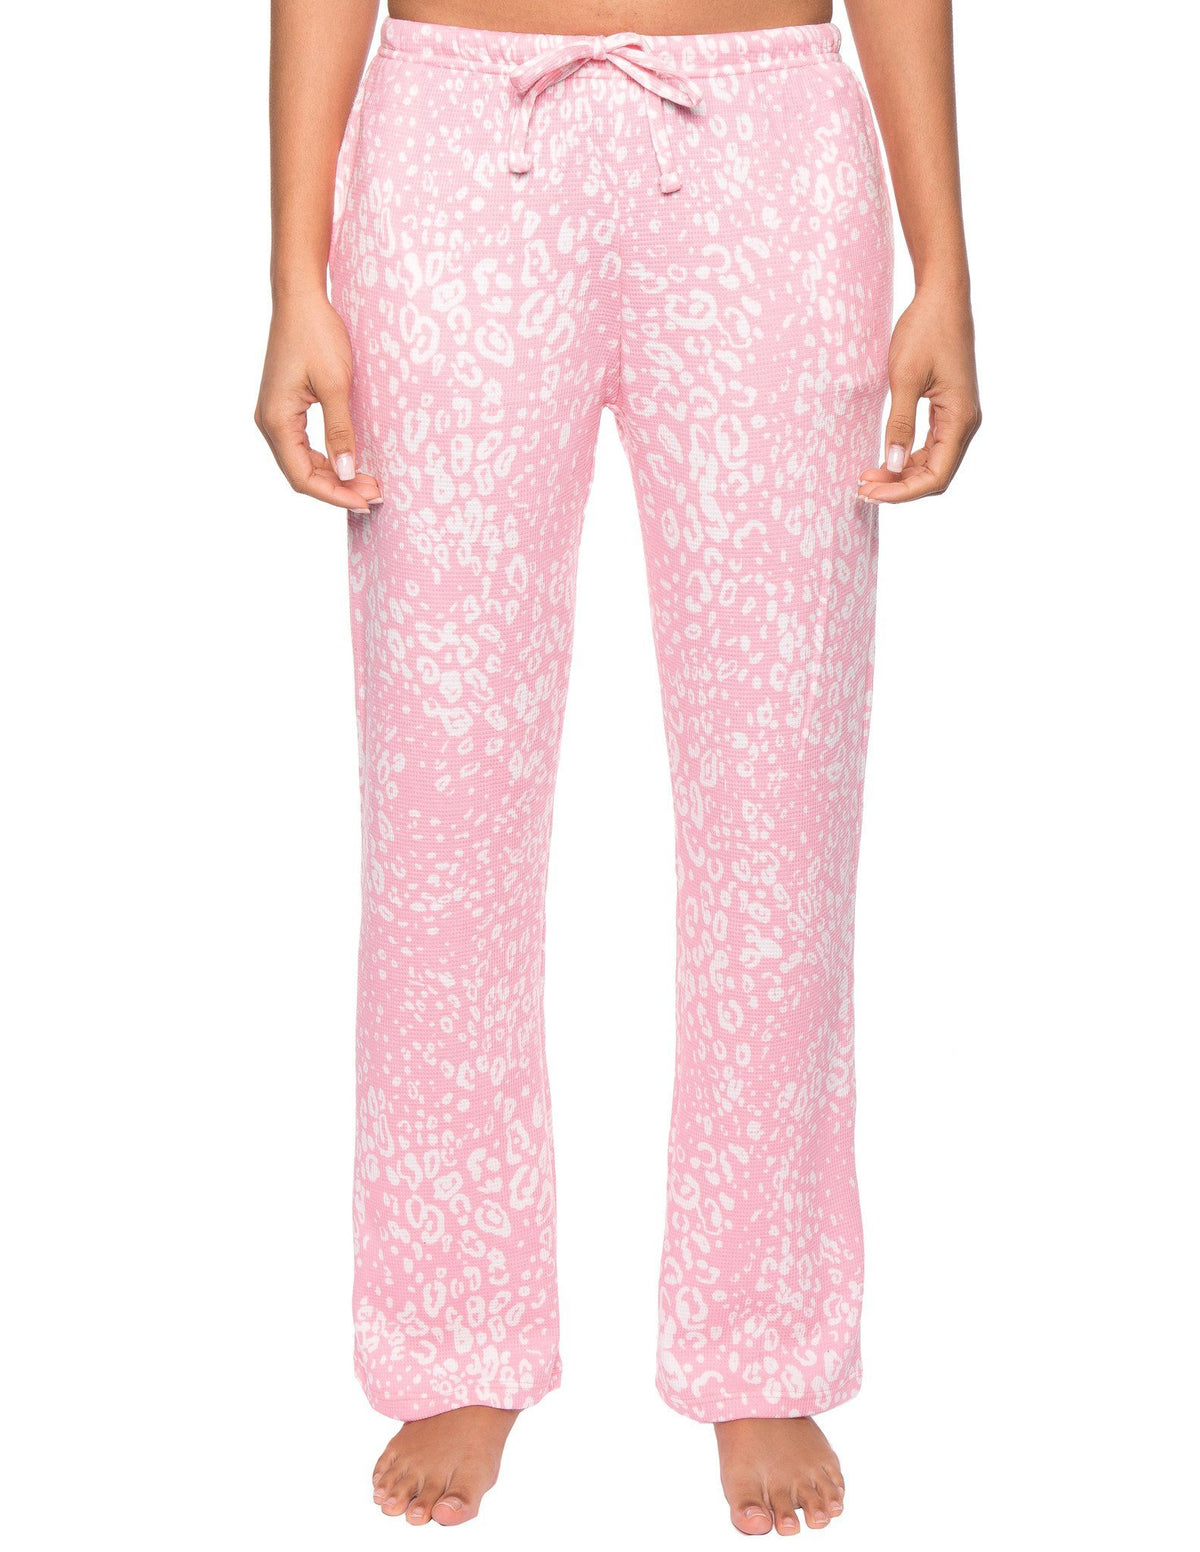 Women's Waffle Knit Thermal Lounge Pants - Leopard Pink/Grey